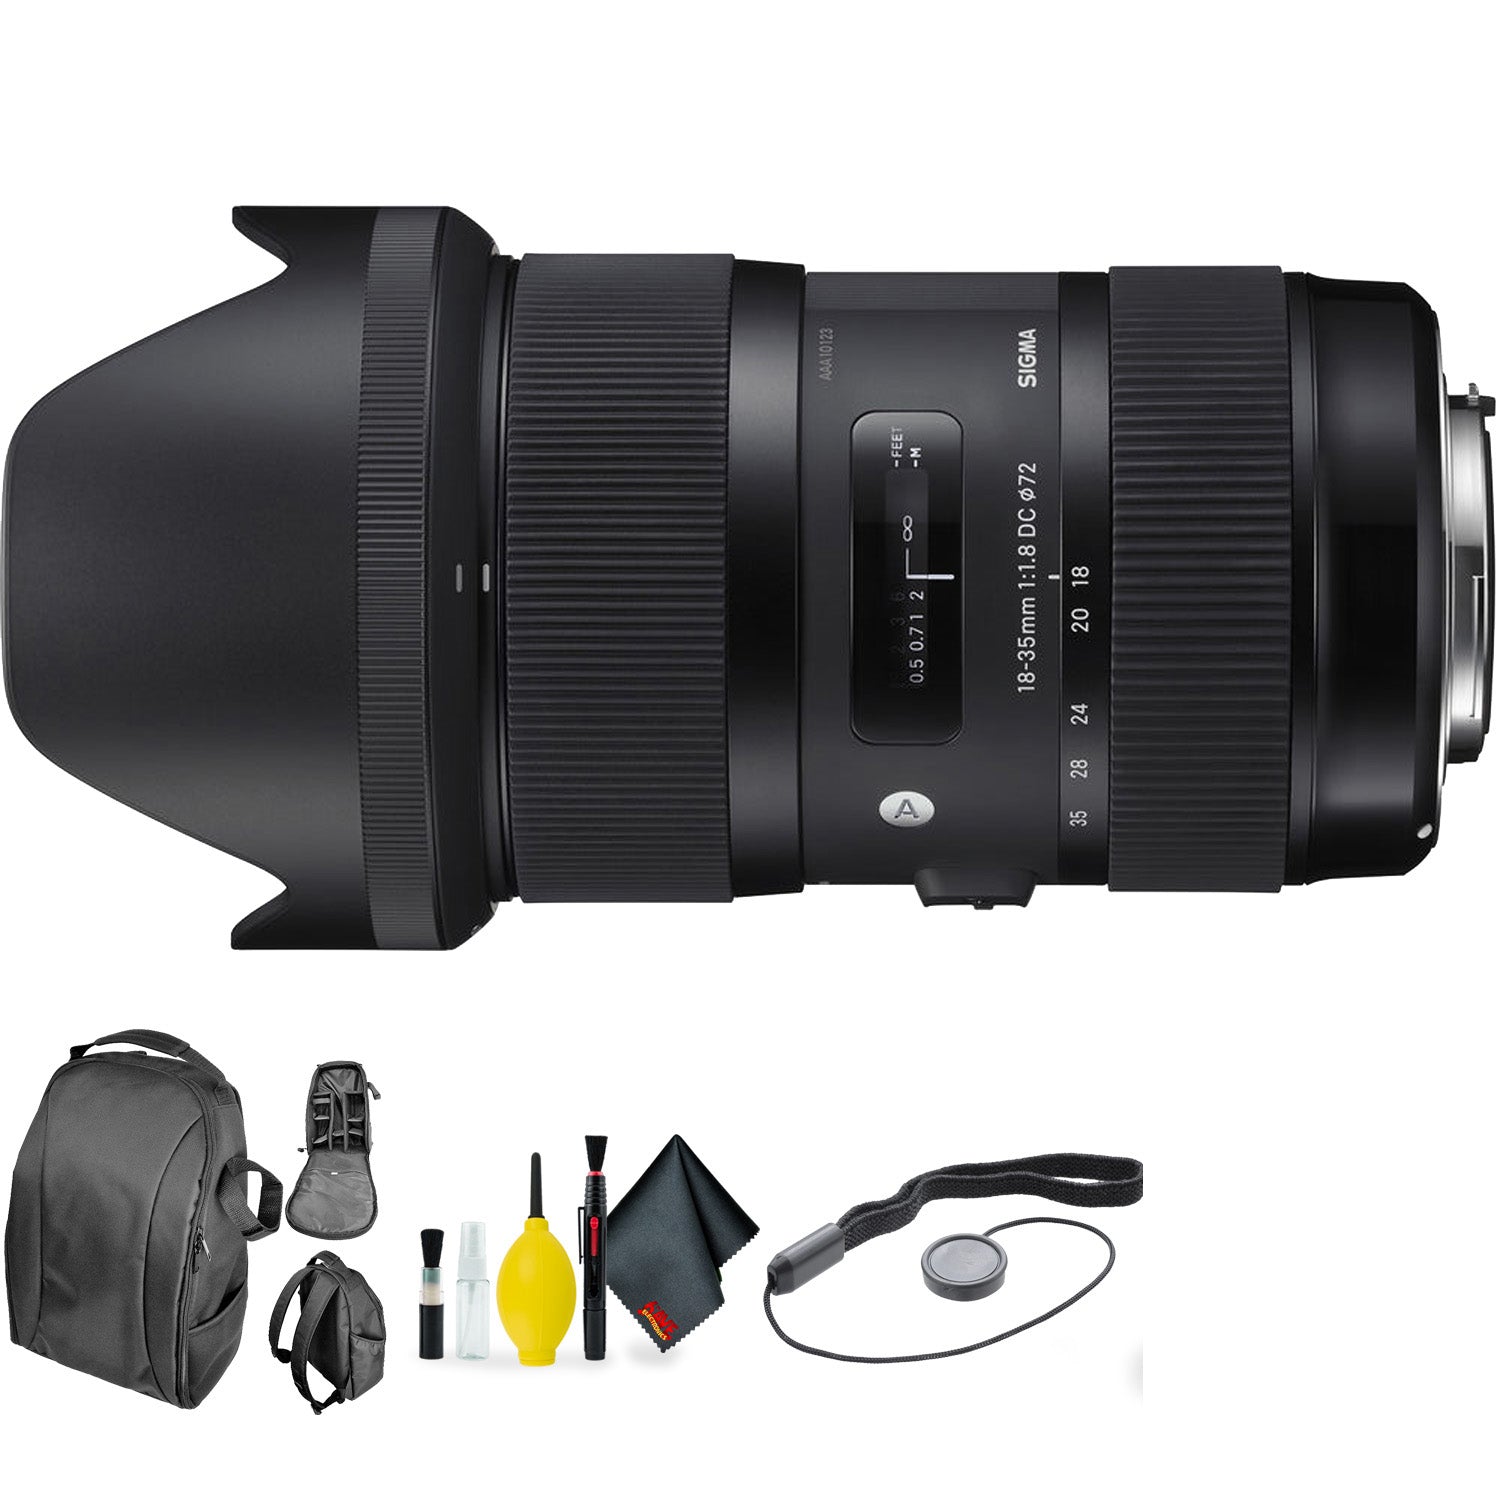 Sigma 18-35mm f/1.8 DC HSM Art Lens for Nikon + Deluxe Lens Cleaning Kit Bundle